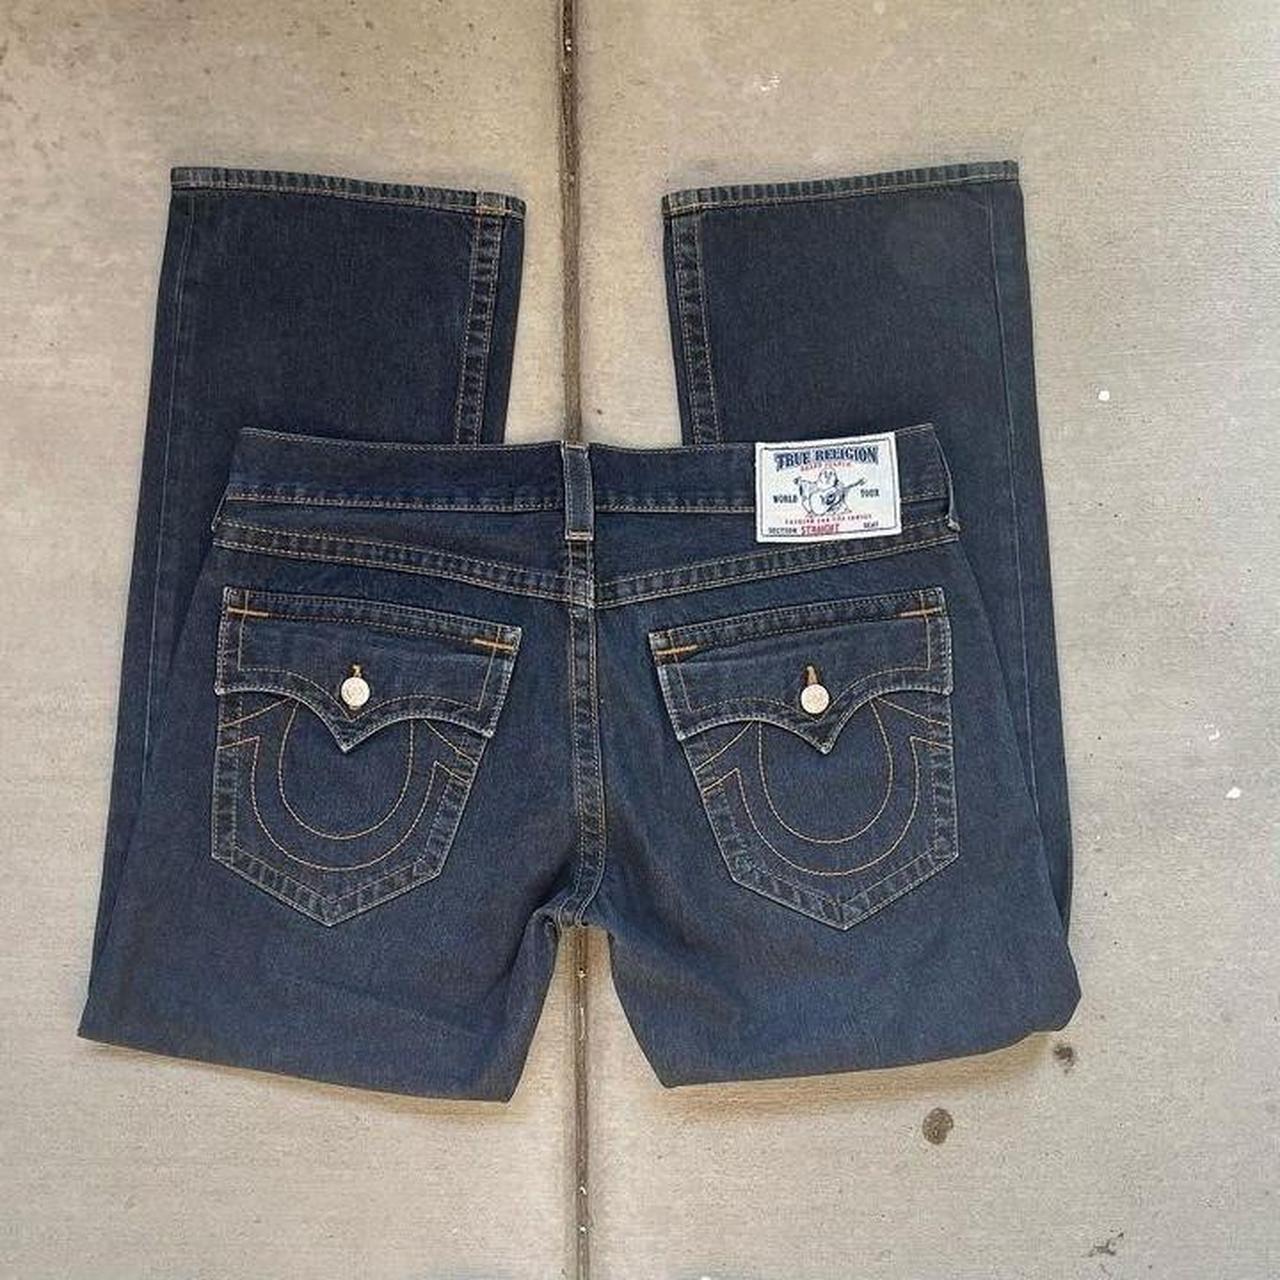 Size 38/32 true religion jeans super nice color and... - Depop